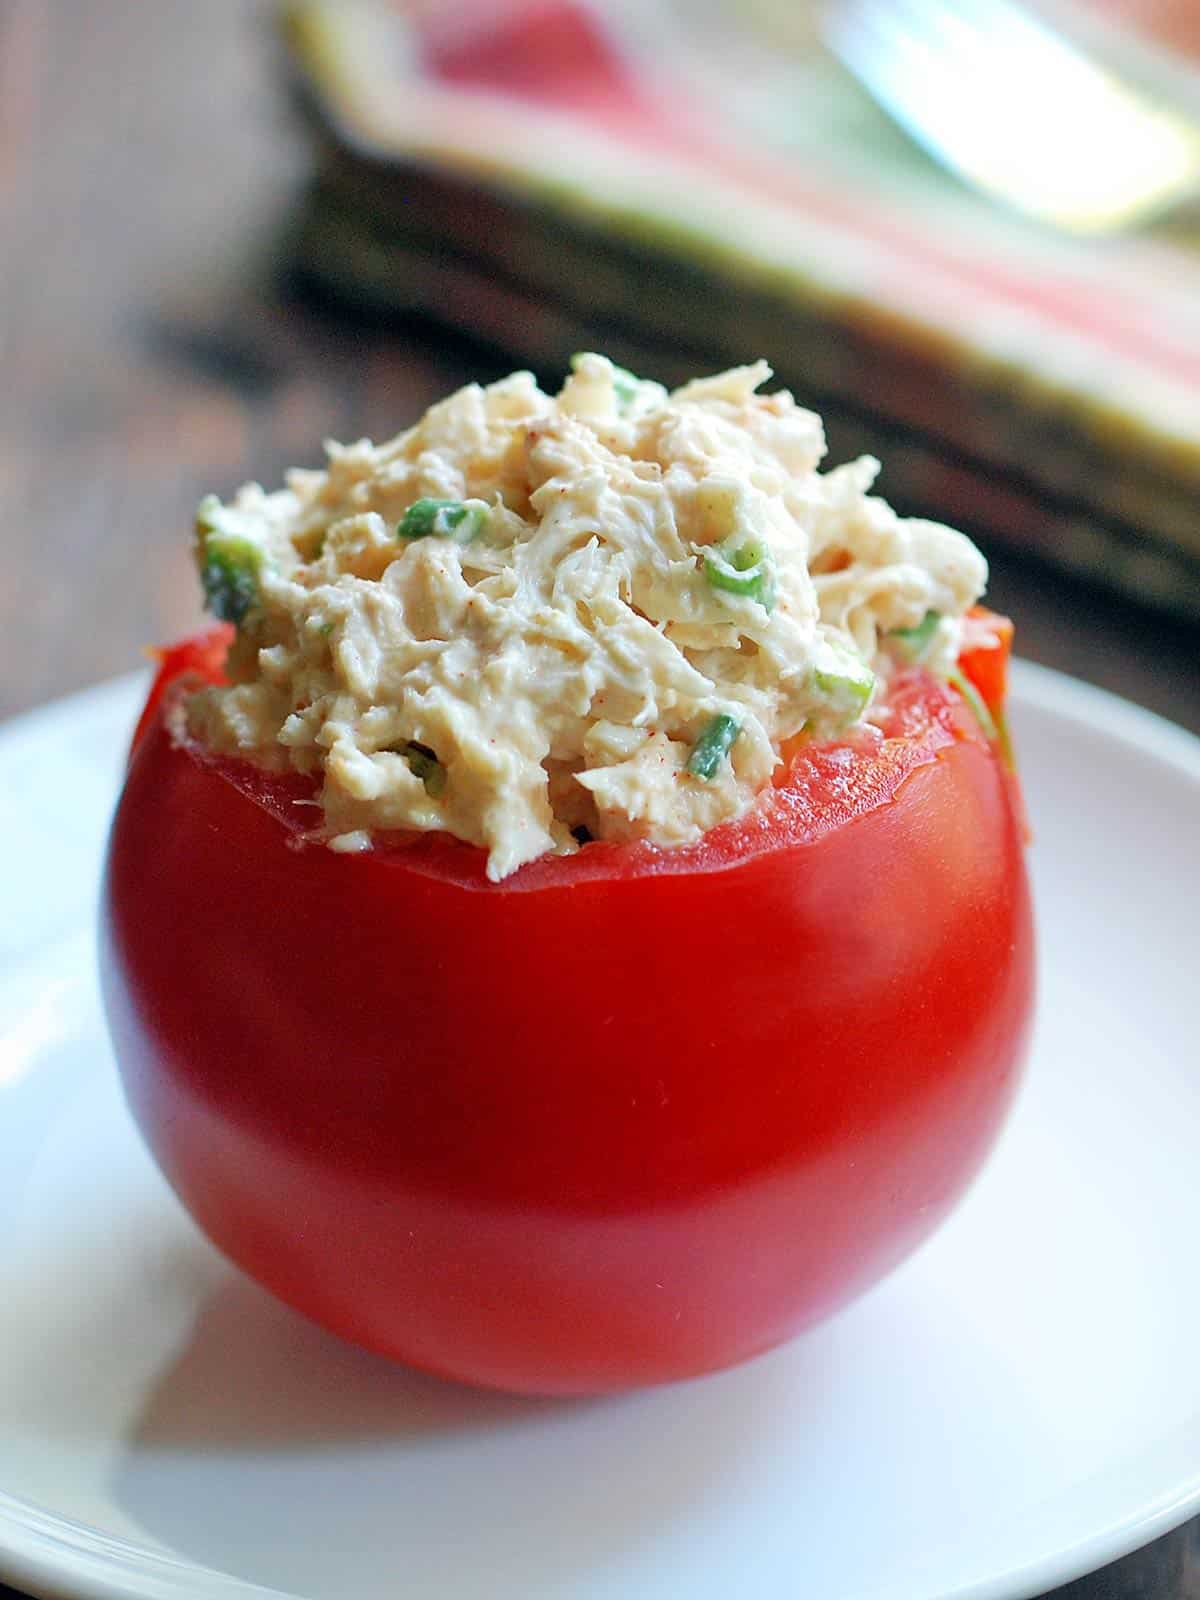 Crab salad stuffed inside a tomato. 